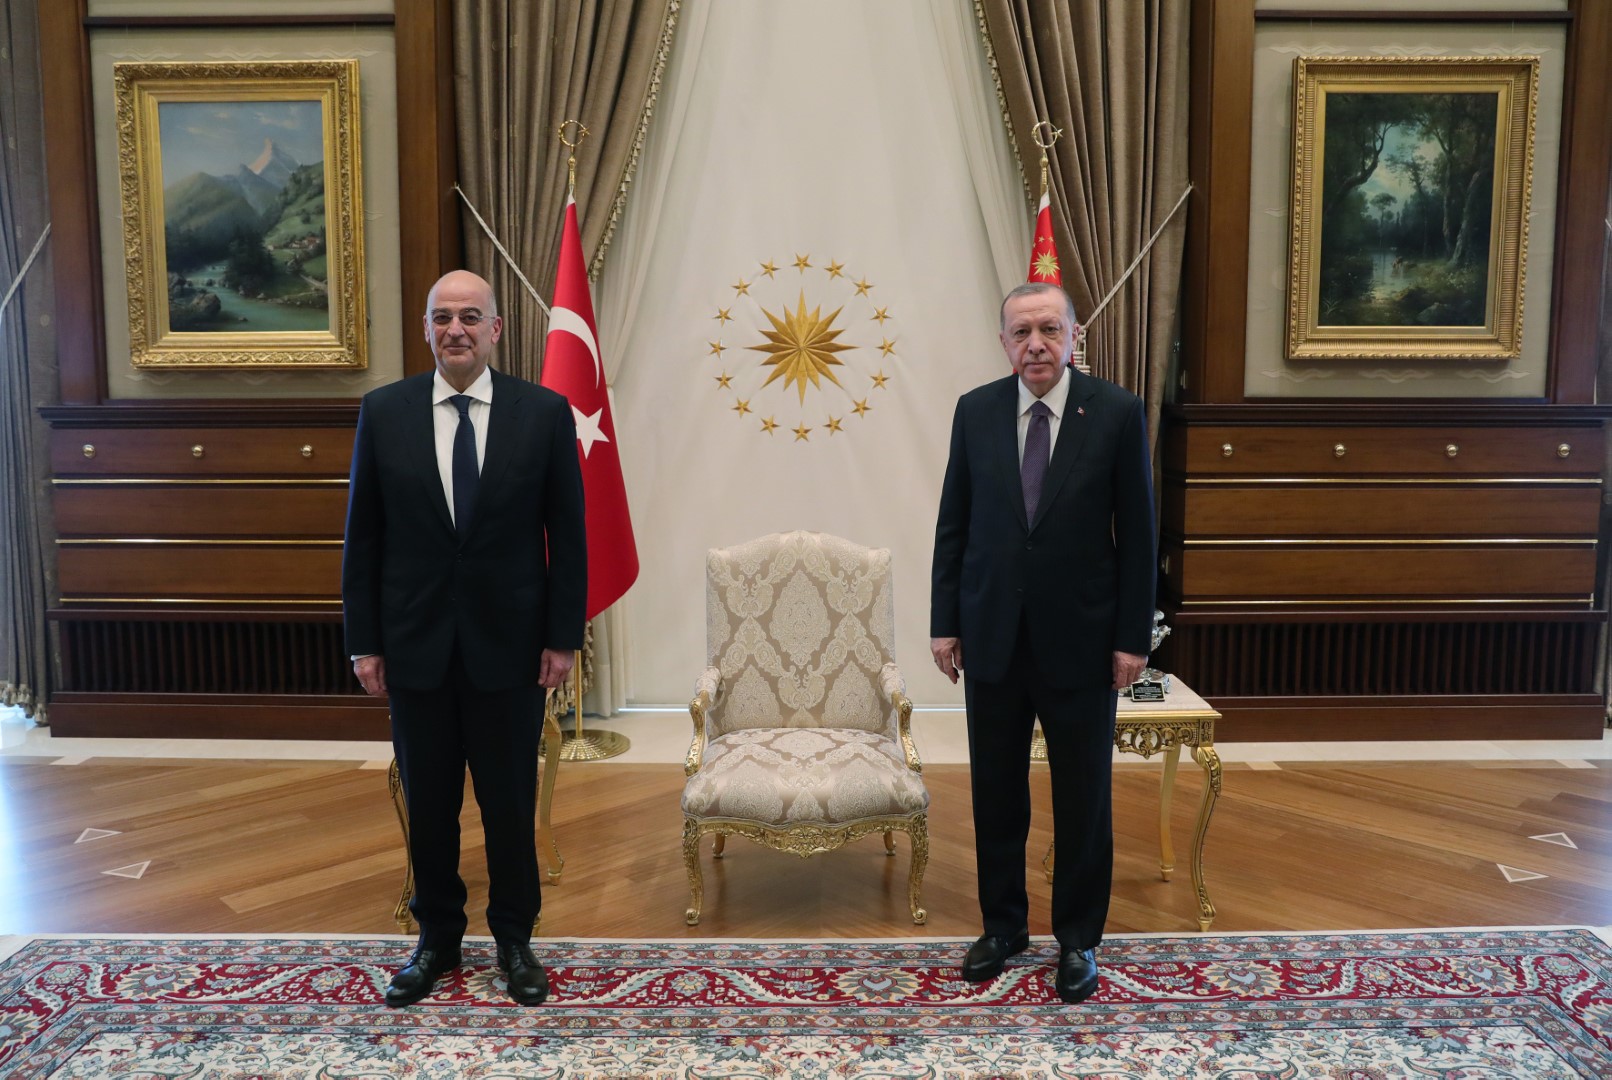 (Ξένη Δημοσίευση)  Ο Πρόεδρος της Τουρκίας Recep Tayyip Erdogan (Δ) υποδέχεται τον υπουργό Εξωτερικών Νίκο Δένδια (Α), κατά τη διάρκεια της συνάντησής τους, στο Προεδρικό Μέγαρο στην Άγκυρα, την Πέμπτη 15 Απριλίου 2021. Σε μια προσπάθεια να υπάρξει επανέναρξη της συνεννόησης μεταξύ της Ελλάδας και της Τουρκίας στο πλαίσιο του Διεθνούς Δικαίου, ο Νίκος Δένδιας μετέβη  στην Άγκυρα, συνοδευόμενος από τον υφυπουργό Εξωτερικών, αρμόδιο για την οικονομική διπλωματία, Κώστα Φραγκογιάννη, καθώς και την υπηρεσιακή ηγεσία του υπουργείου, προκειμένου να συναντηθεί με τον Πρόεδρο της Τουρκίας Ρετζέπ Ταγίπ Ερντογάν και τον Τούρκο ομόλογό του Μεβλούτ Τσαβούσογλου. Οι συναντήσεις έρχονται μετά την πραγματοποίηση δύο γύρων διερευνητικών επαφών εντός δύο μηνών και των πολιτικών διαβουλεύσεων σε ανώτατο υπηρεσιακό επίπεδο μεταξύ των δύο υπουργείων Εξωτερικών που ακολούθησαν. Οι δύο πλευρές αναμένεται να εξετάσουν ζητήματα διμερών σχέσεων, καθώς και περιφερειακά και διεθνή ζητήματα. Ειδικότερα, αναμένεται να συζητηθούν οι διμερείς σχέσεις, τόσο πολιτικές όσο και οικονομικές, καθώς και οι διεθνείς εξελίξ